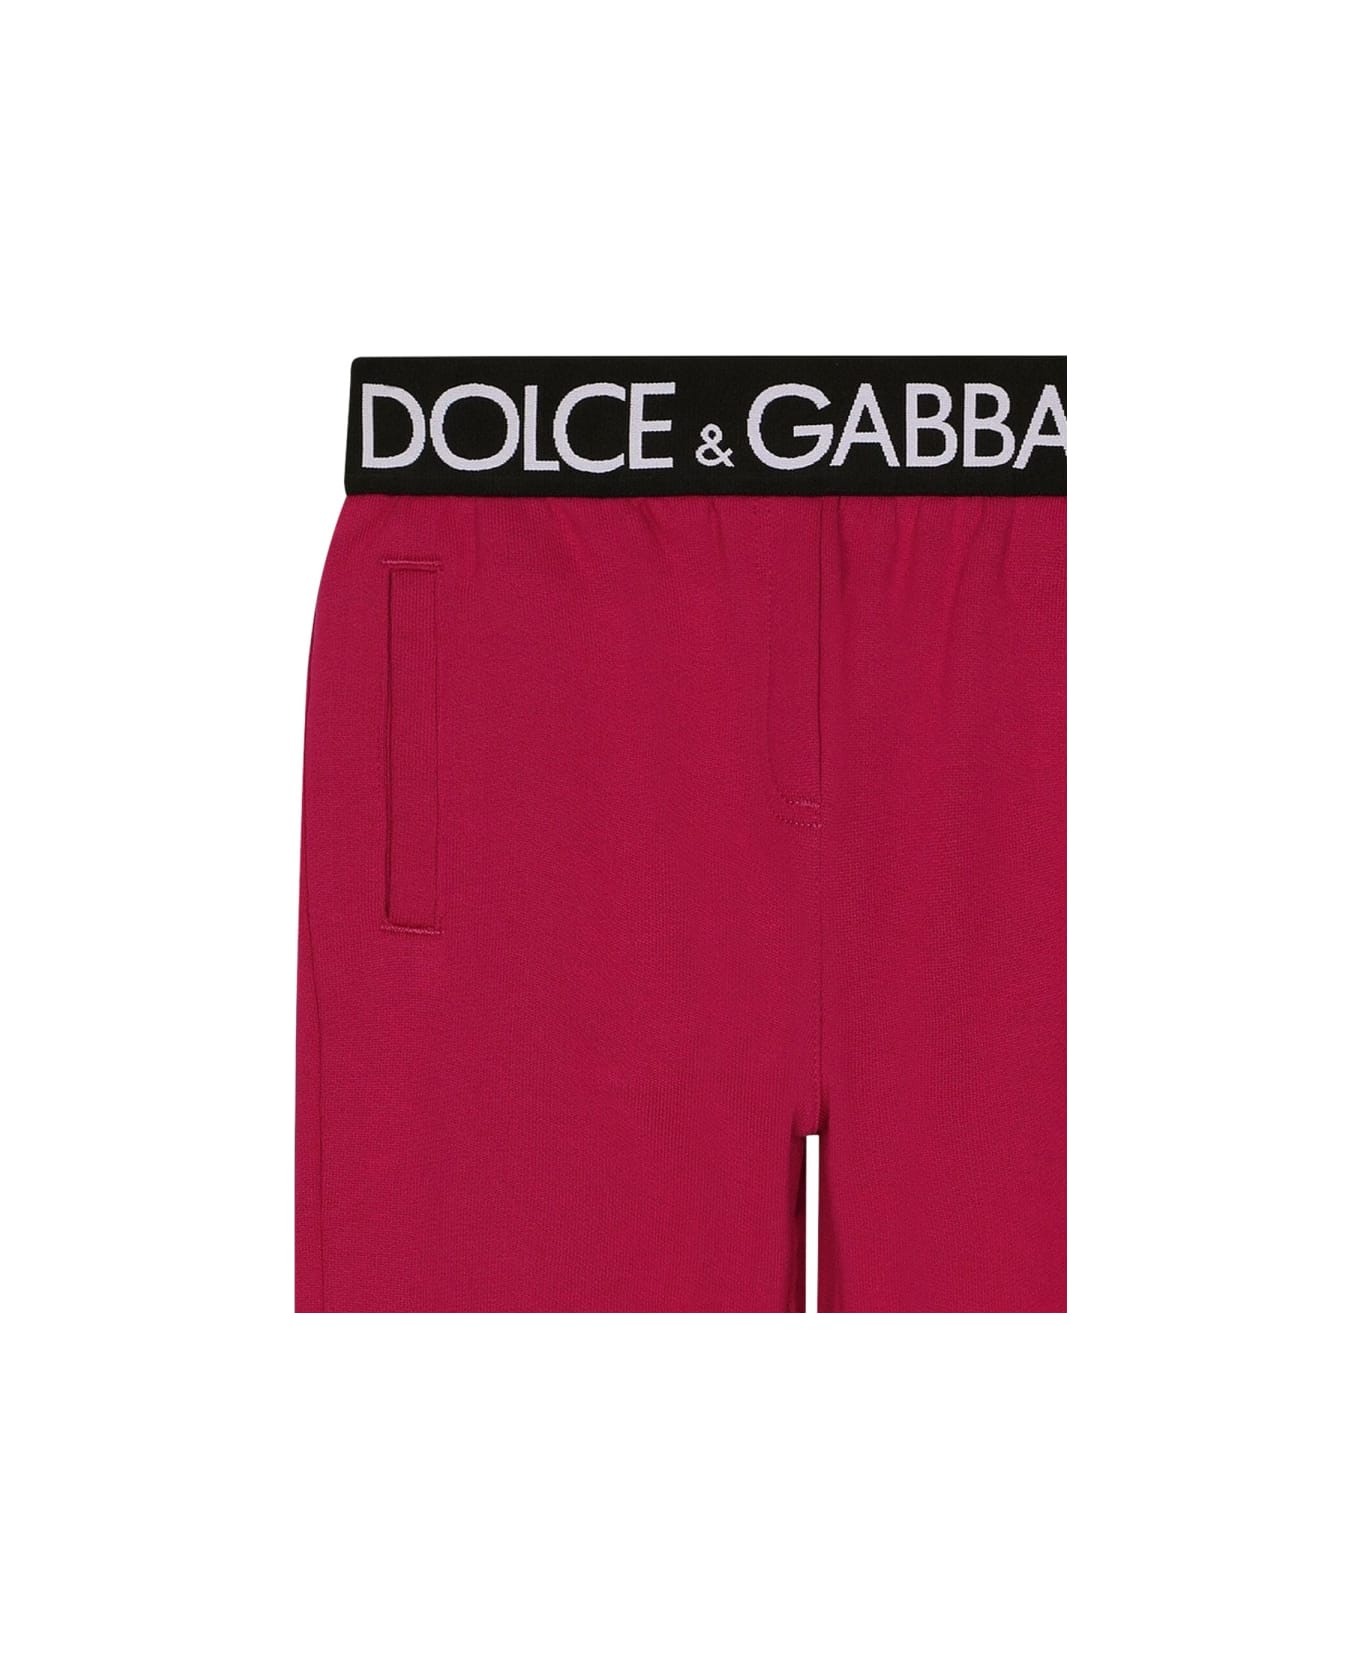 Dolce & Gabbana Jogger Essential - PURPLE ボトムス